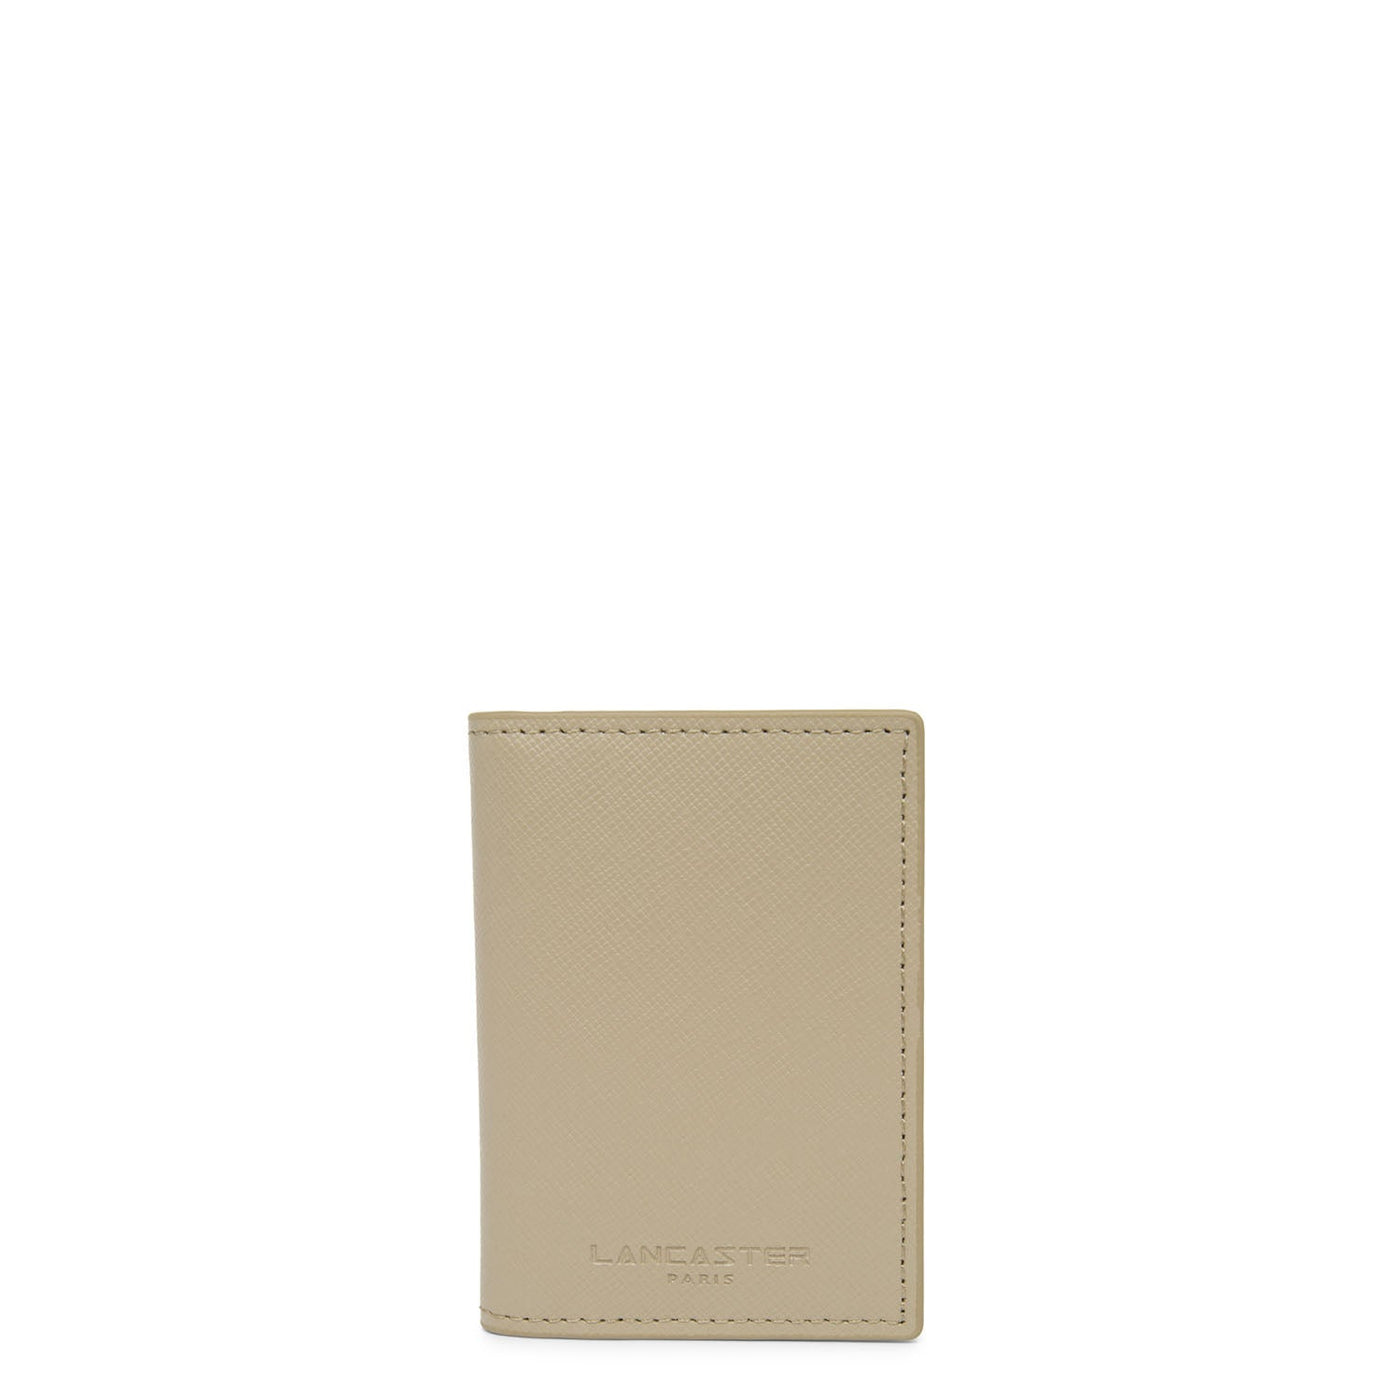 card holder - mathias #couleur_galet